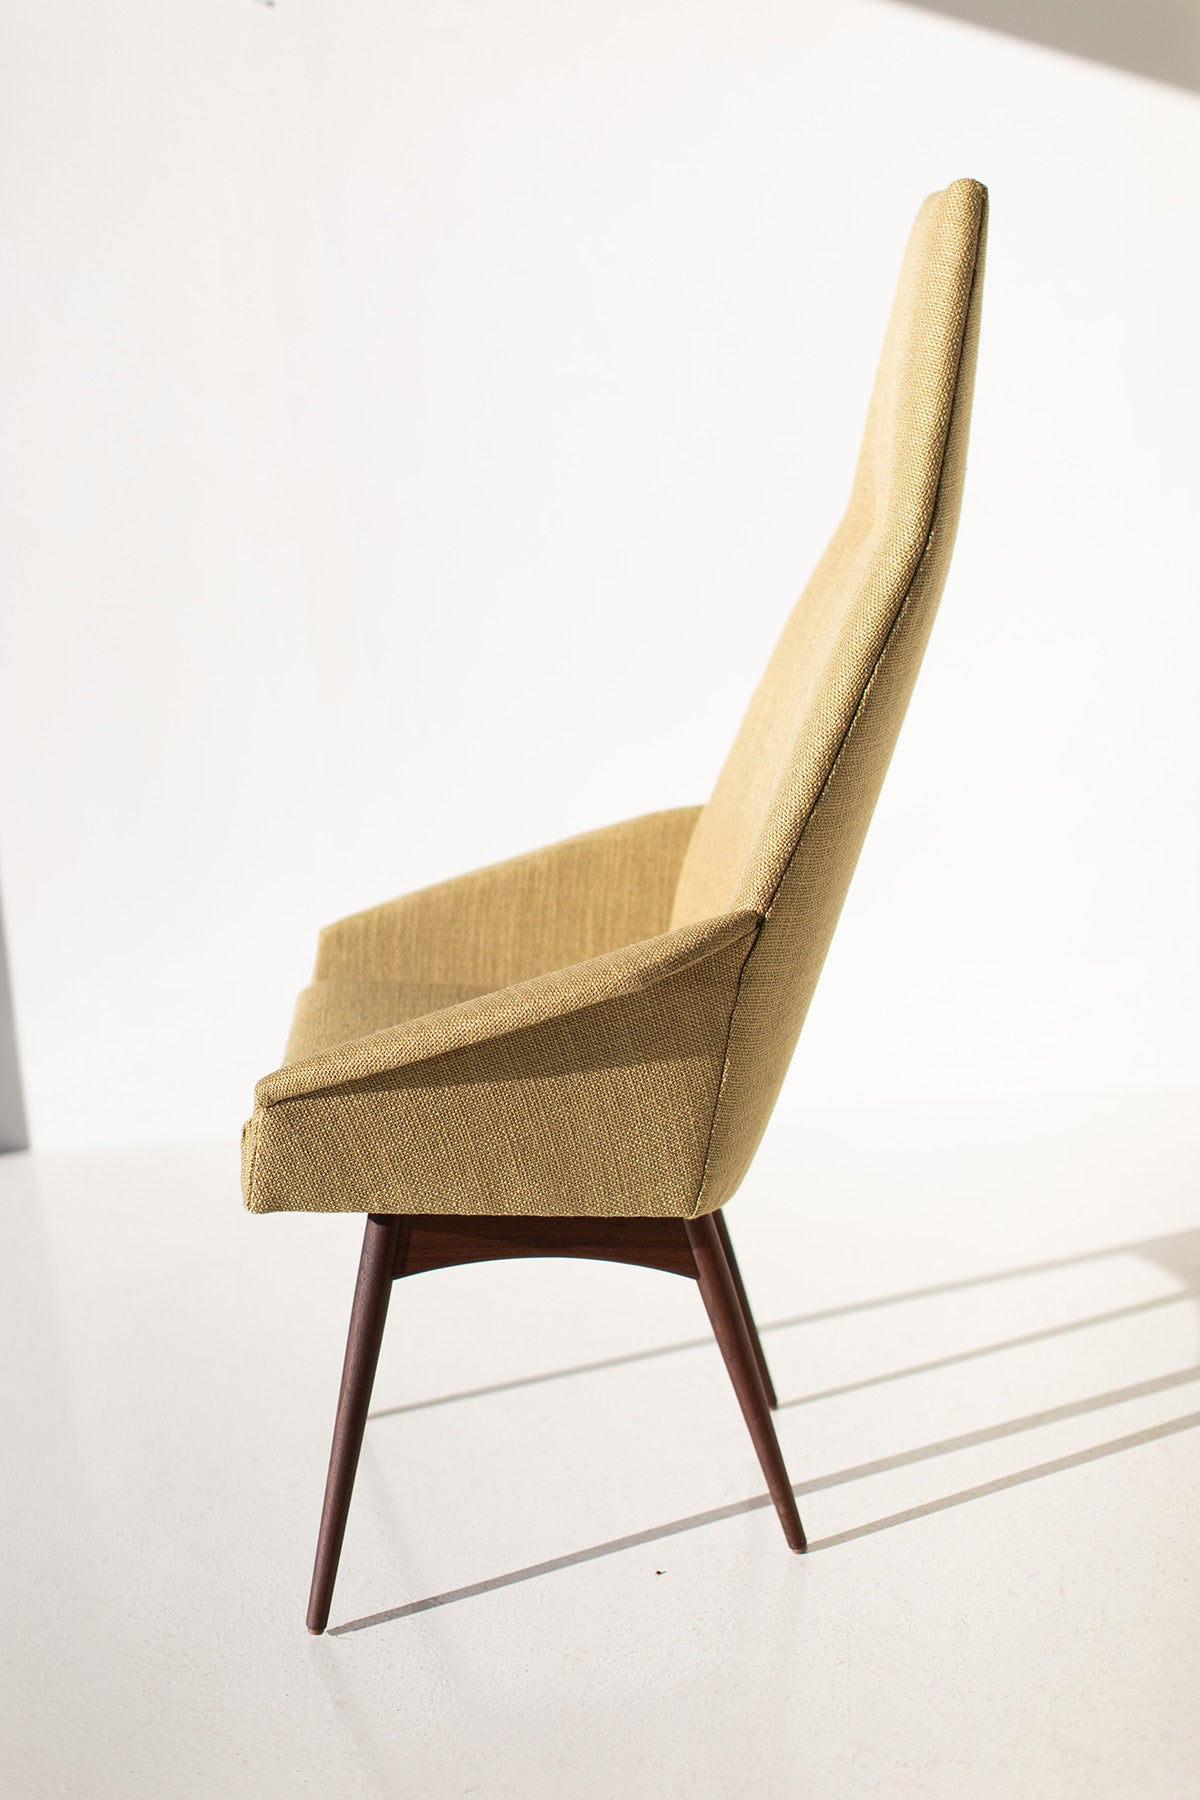 Alto Mid Century Modern Dining Arm Chair for Craft Associates - 2406